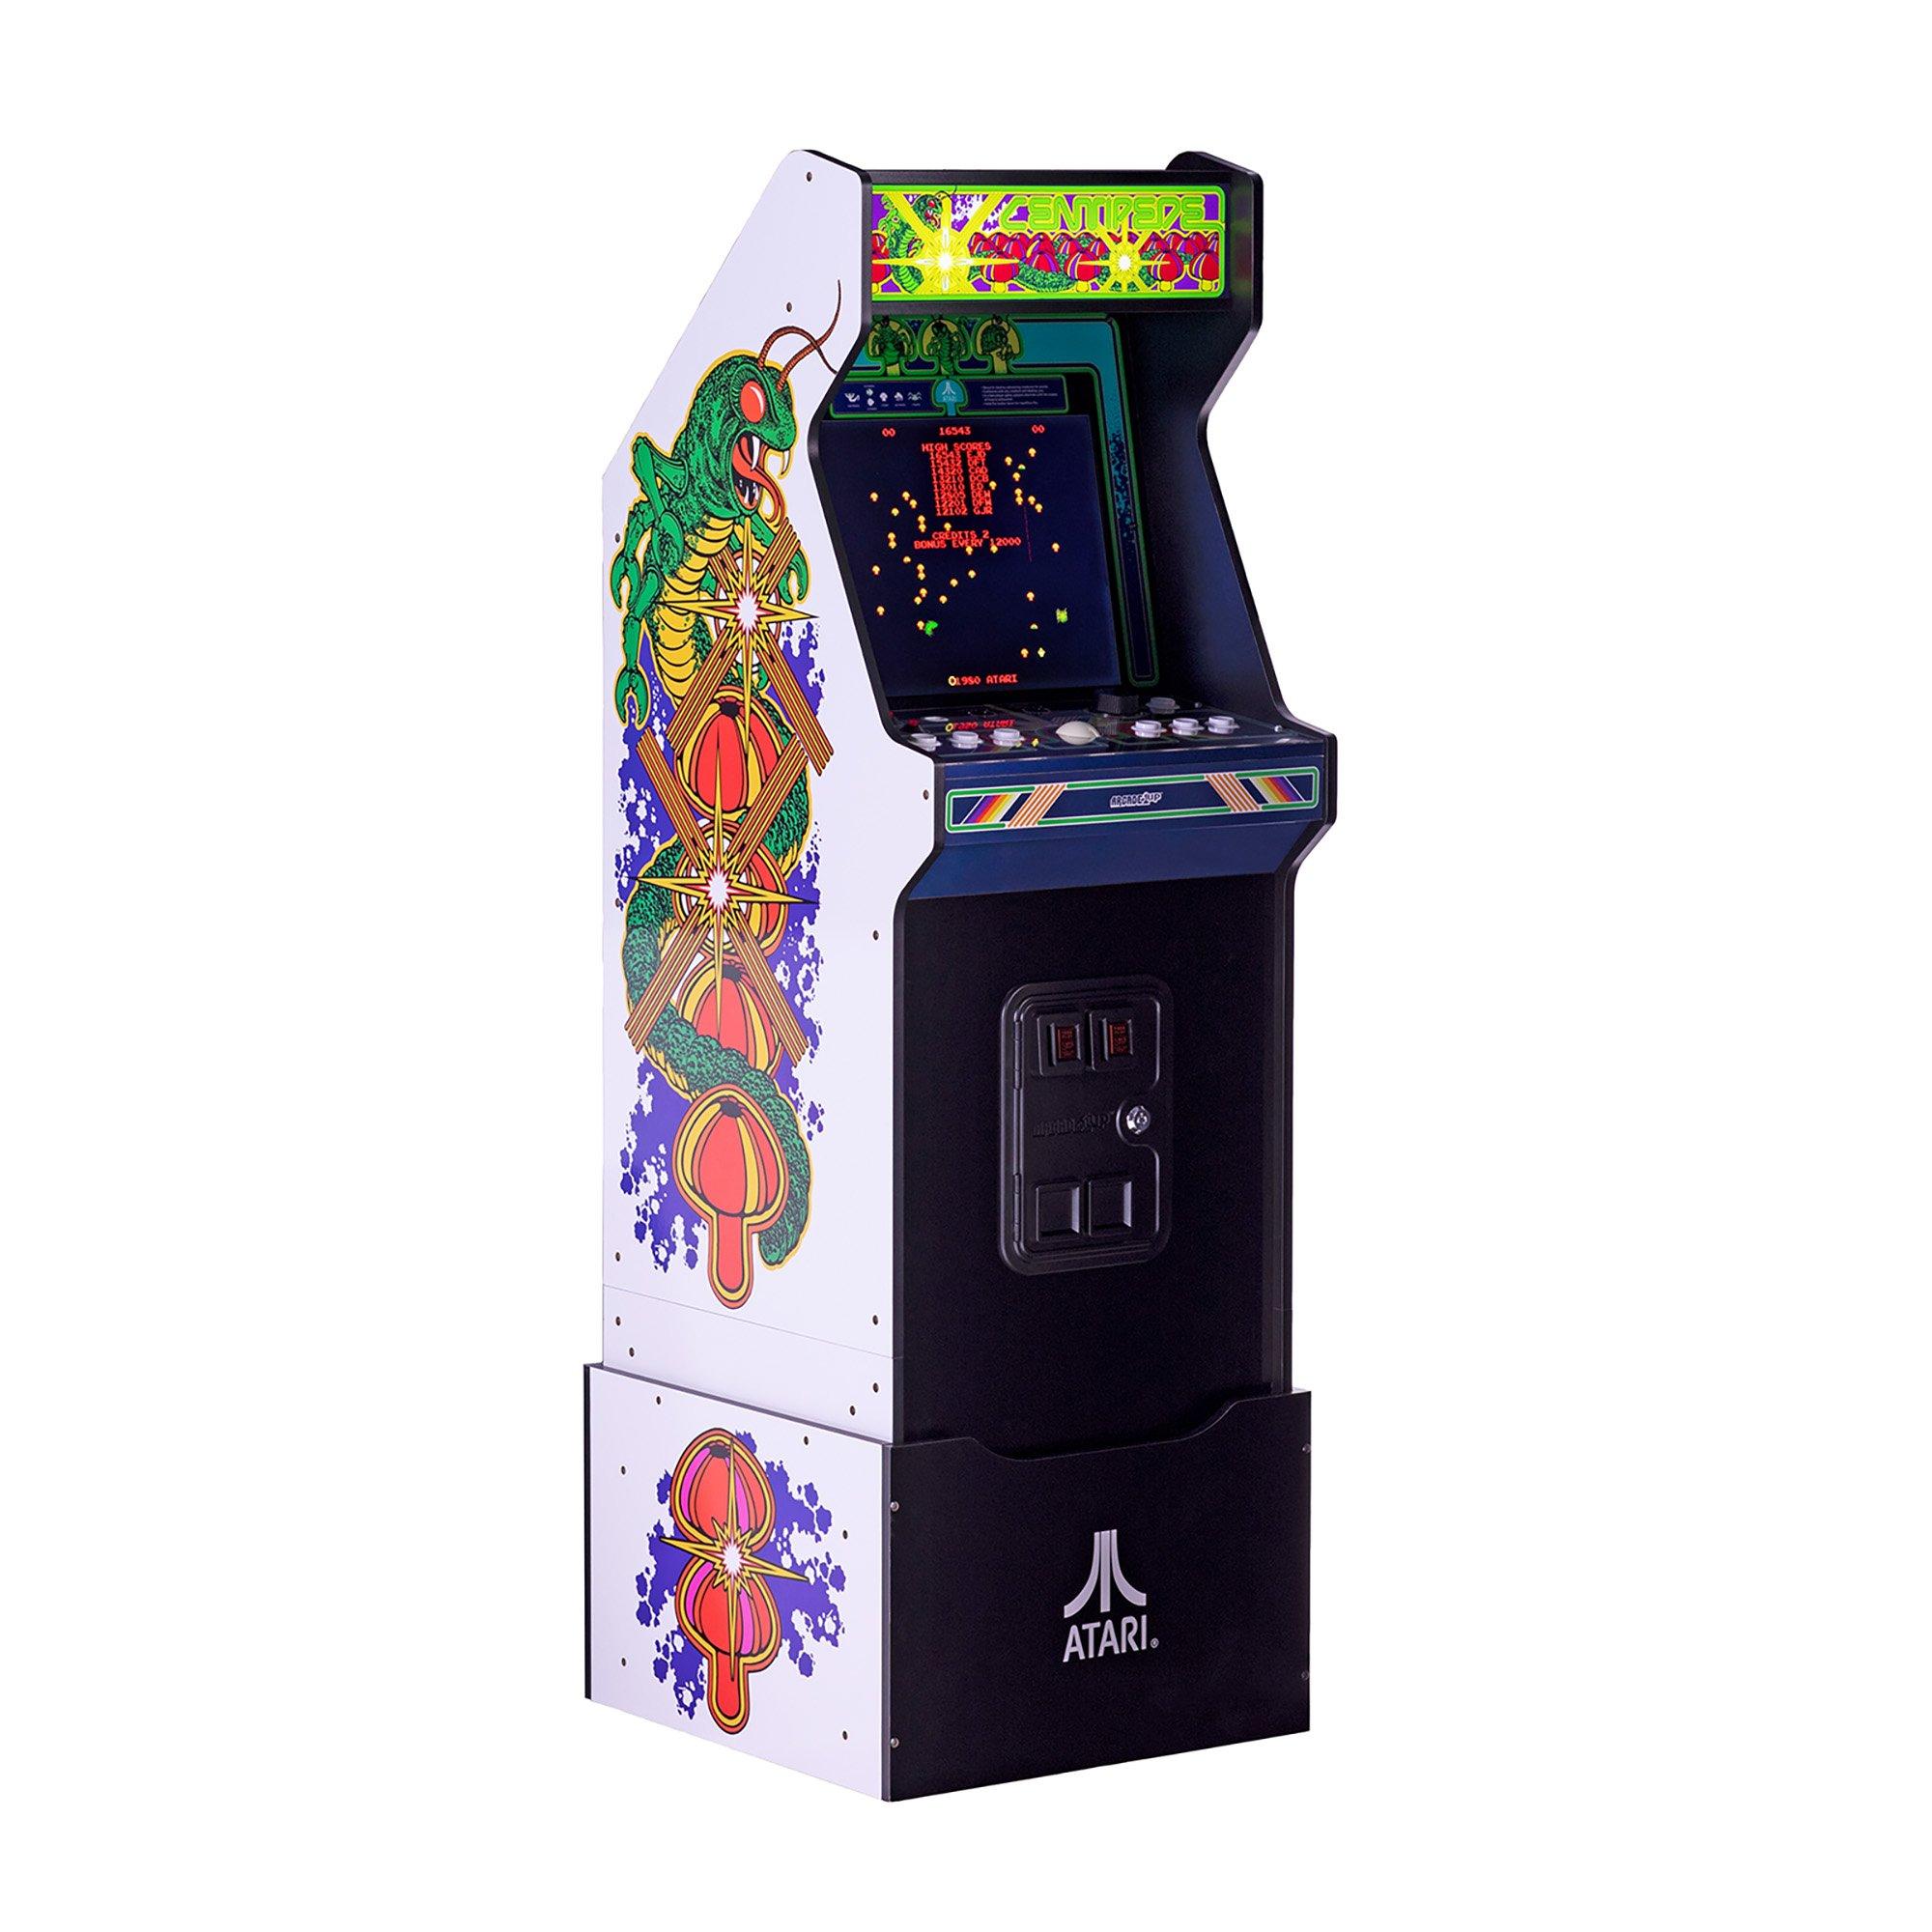 Arcade1Up Centipede Atari Legacy Home Arcade with Riser